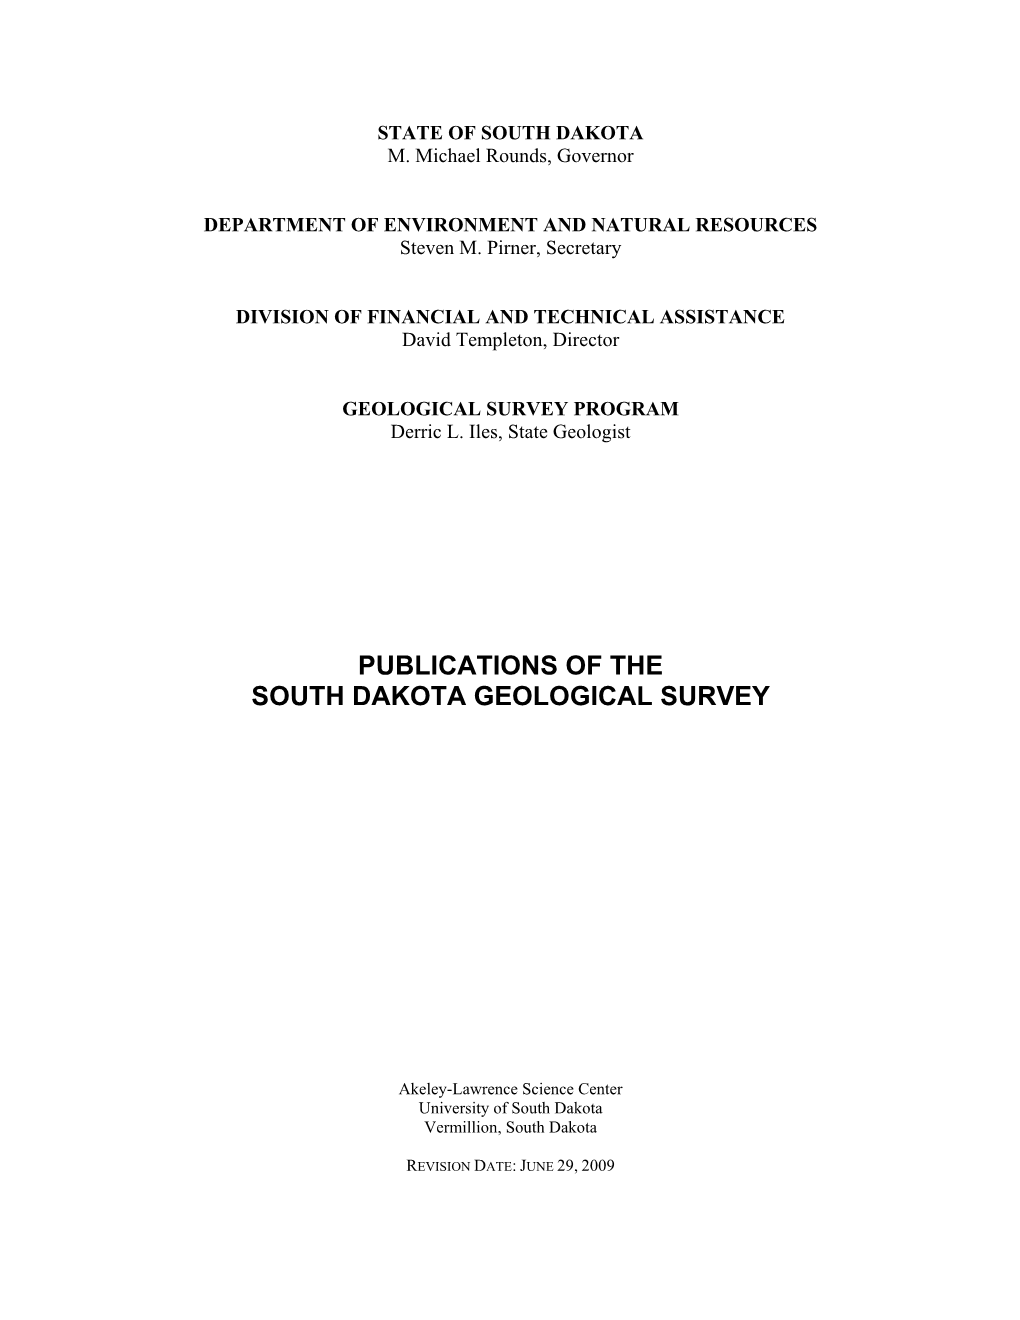 Publications of the South Dakota Geological Survey